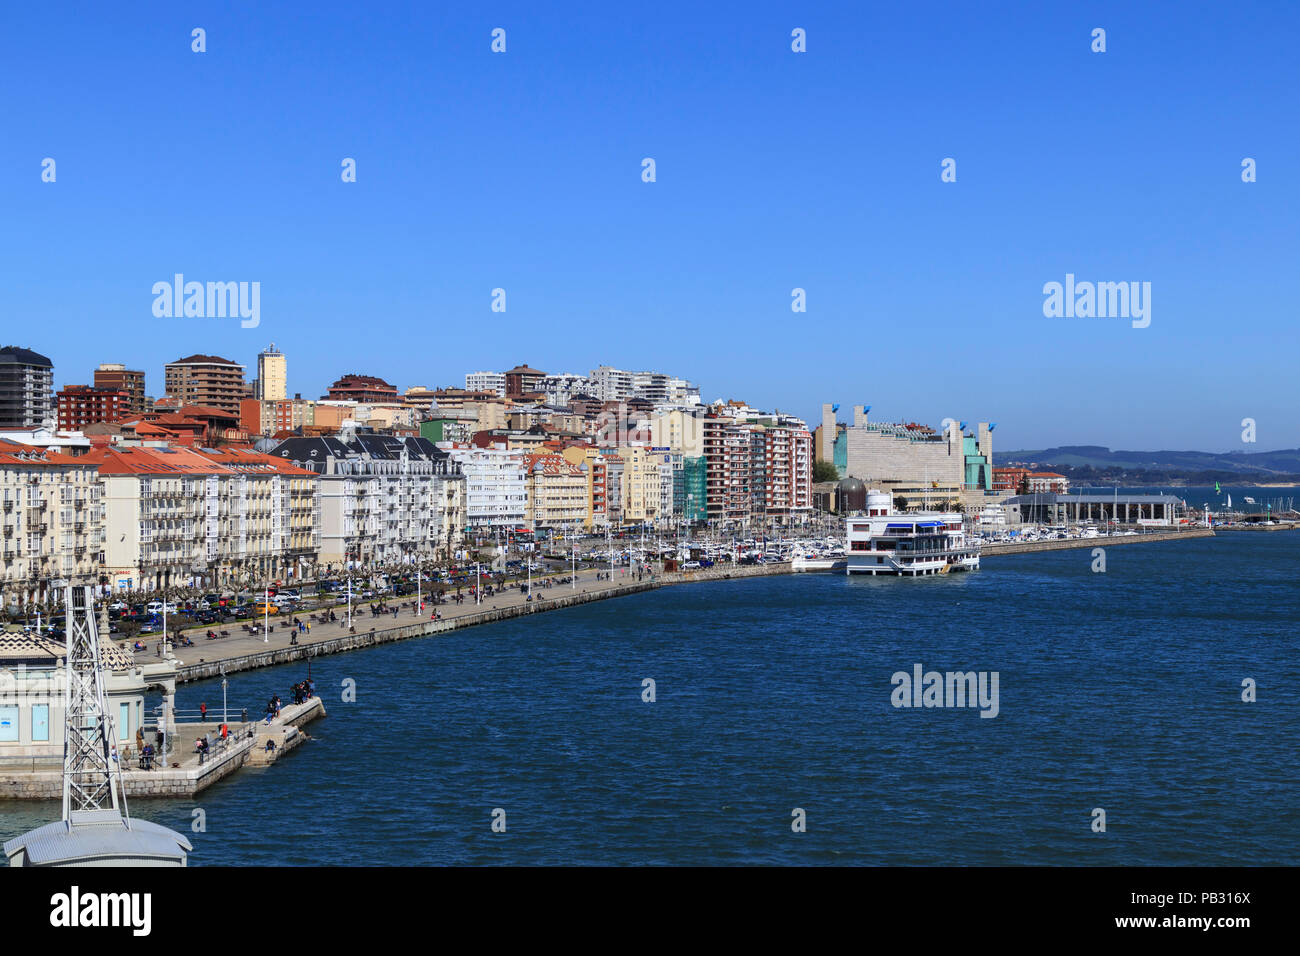 21,323 Santander Spain Images, Stock Photos, 3D objects, & Vectors